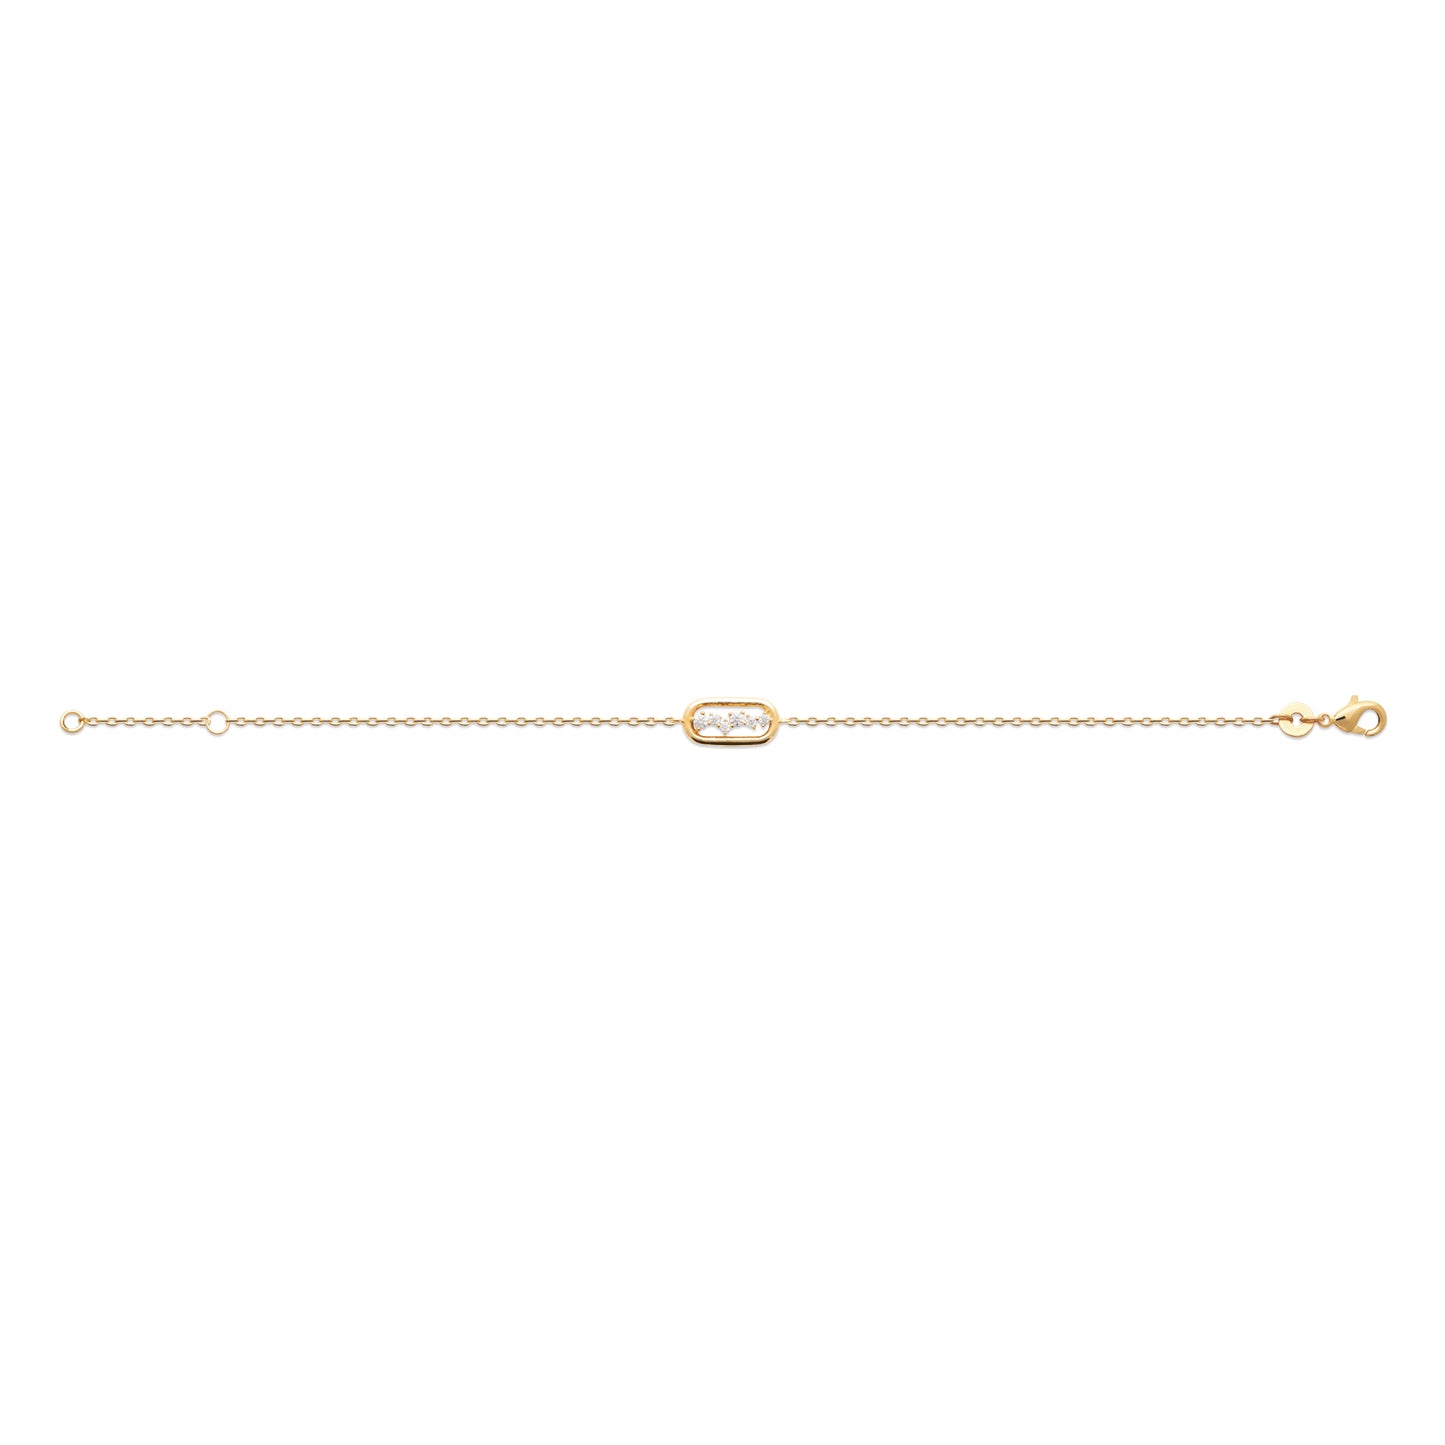 Estrella - Bracelet en Plaqué Or - Yasmeen Jewelry